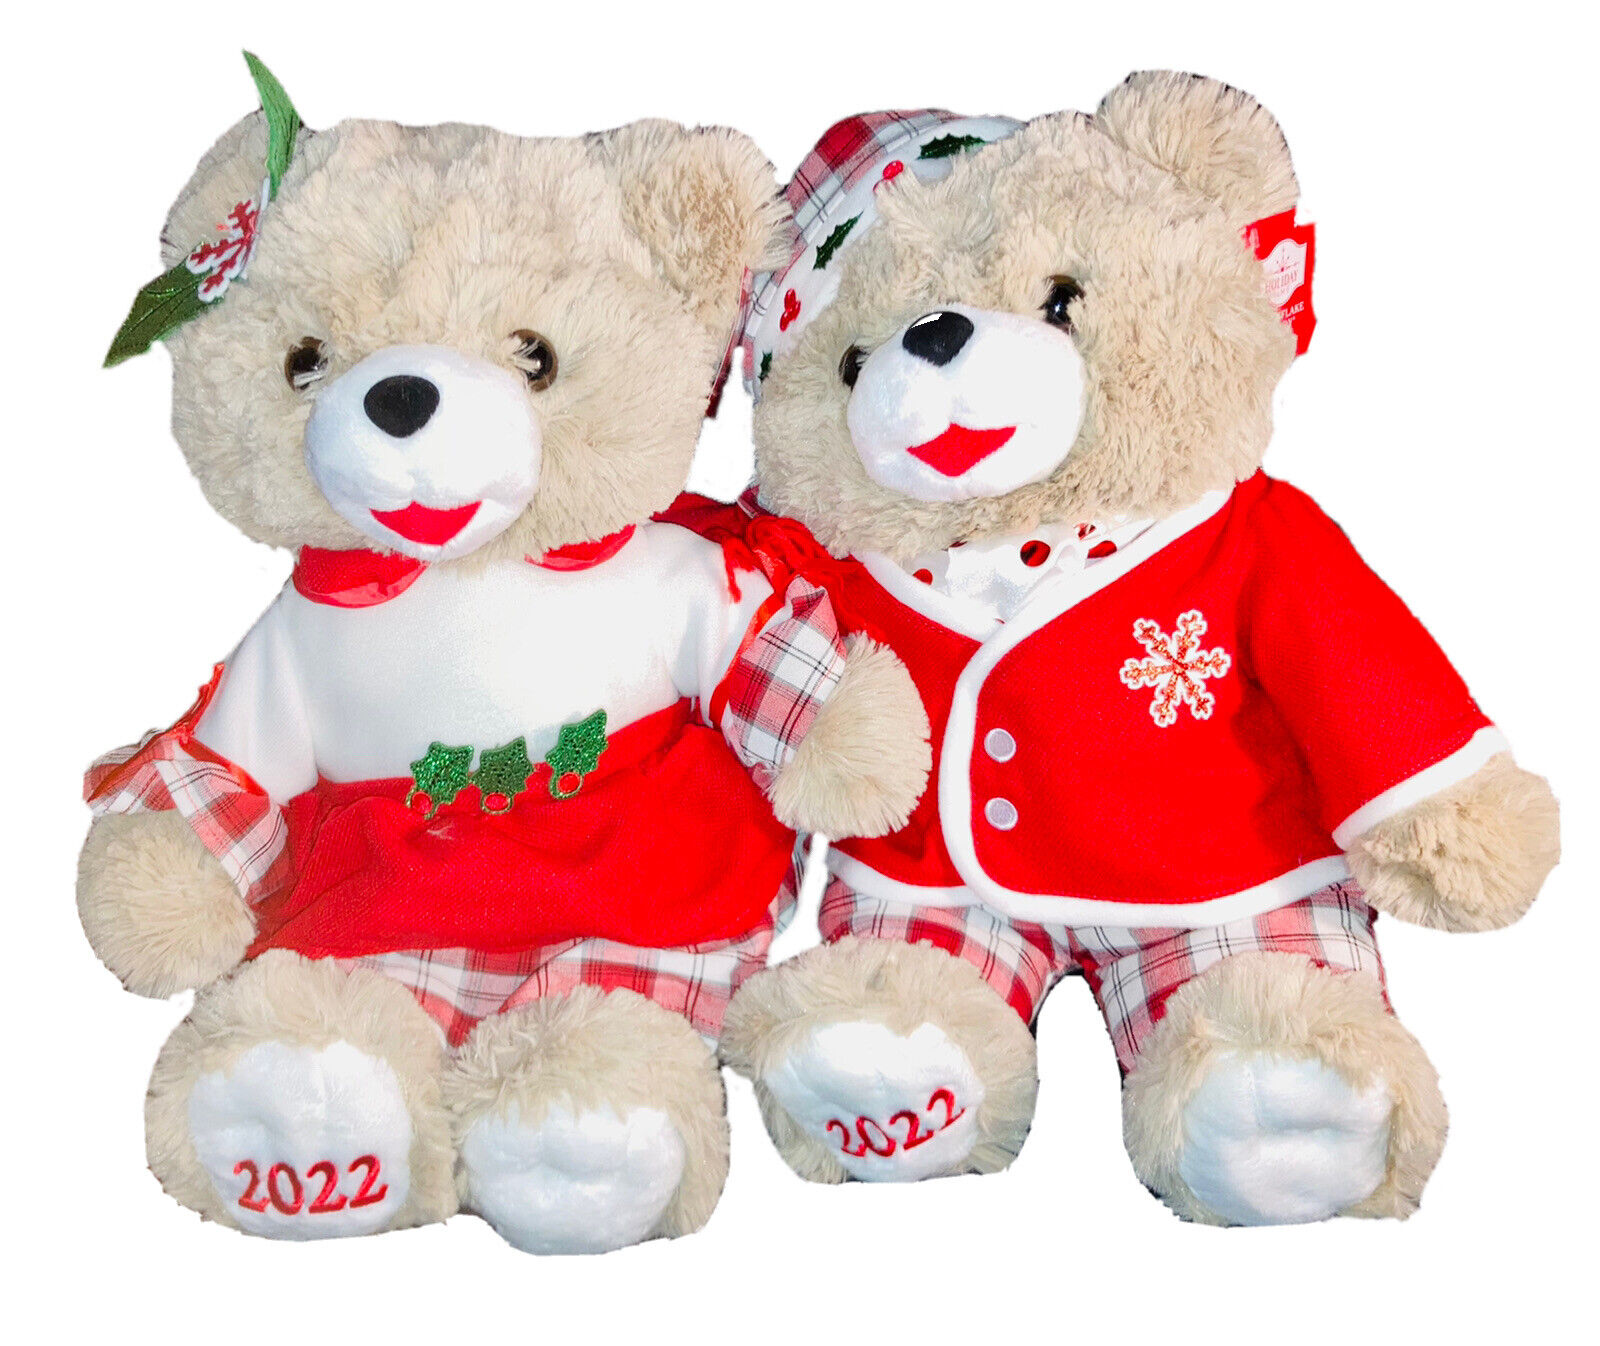 ¡ HOT ! 2022 WALMART CHRISTMAS 20" Snowflake TEDDY BEAR Red BOY & GIRL ! PLAID Holiday Time